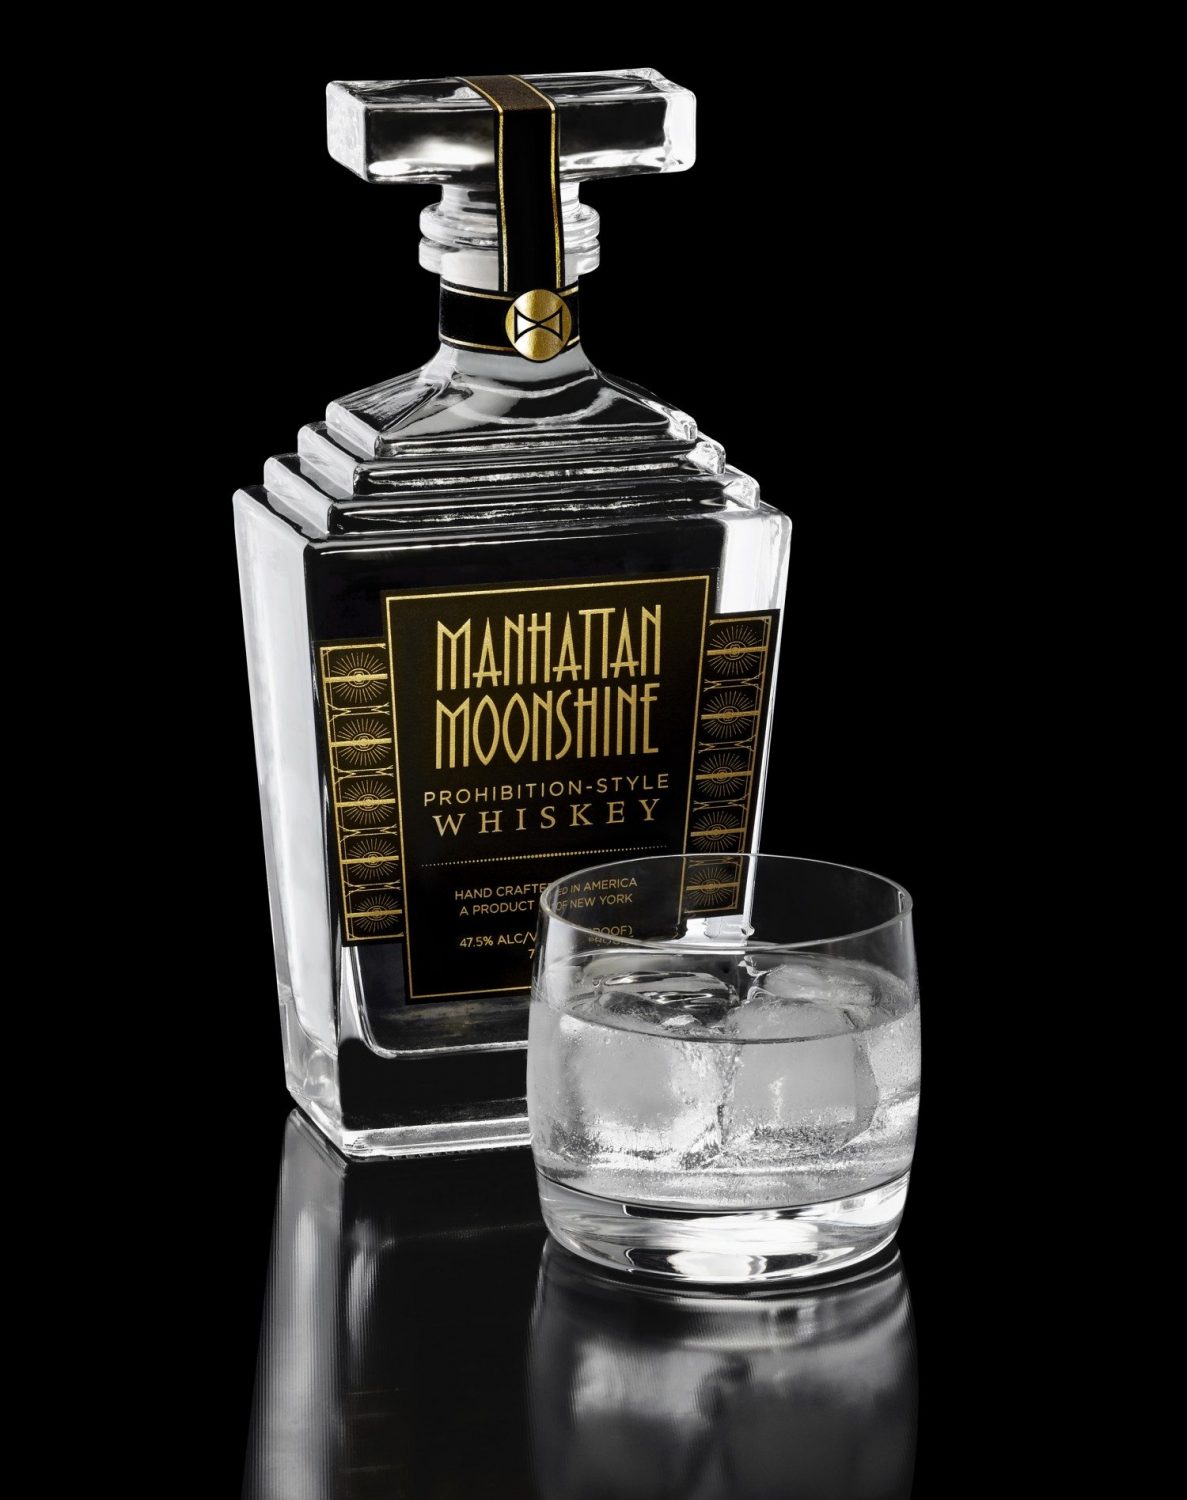 Manhattan Moonshine Founder & CEO Will Kehler on New York City, whiskey, bars, and more